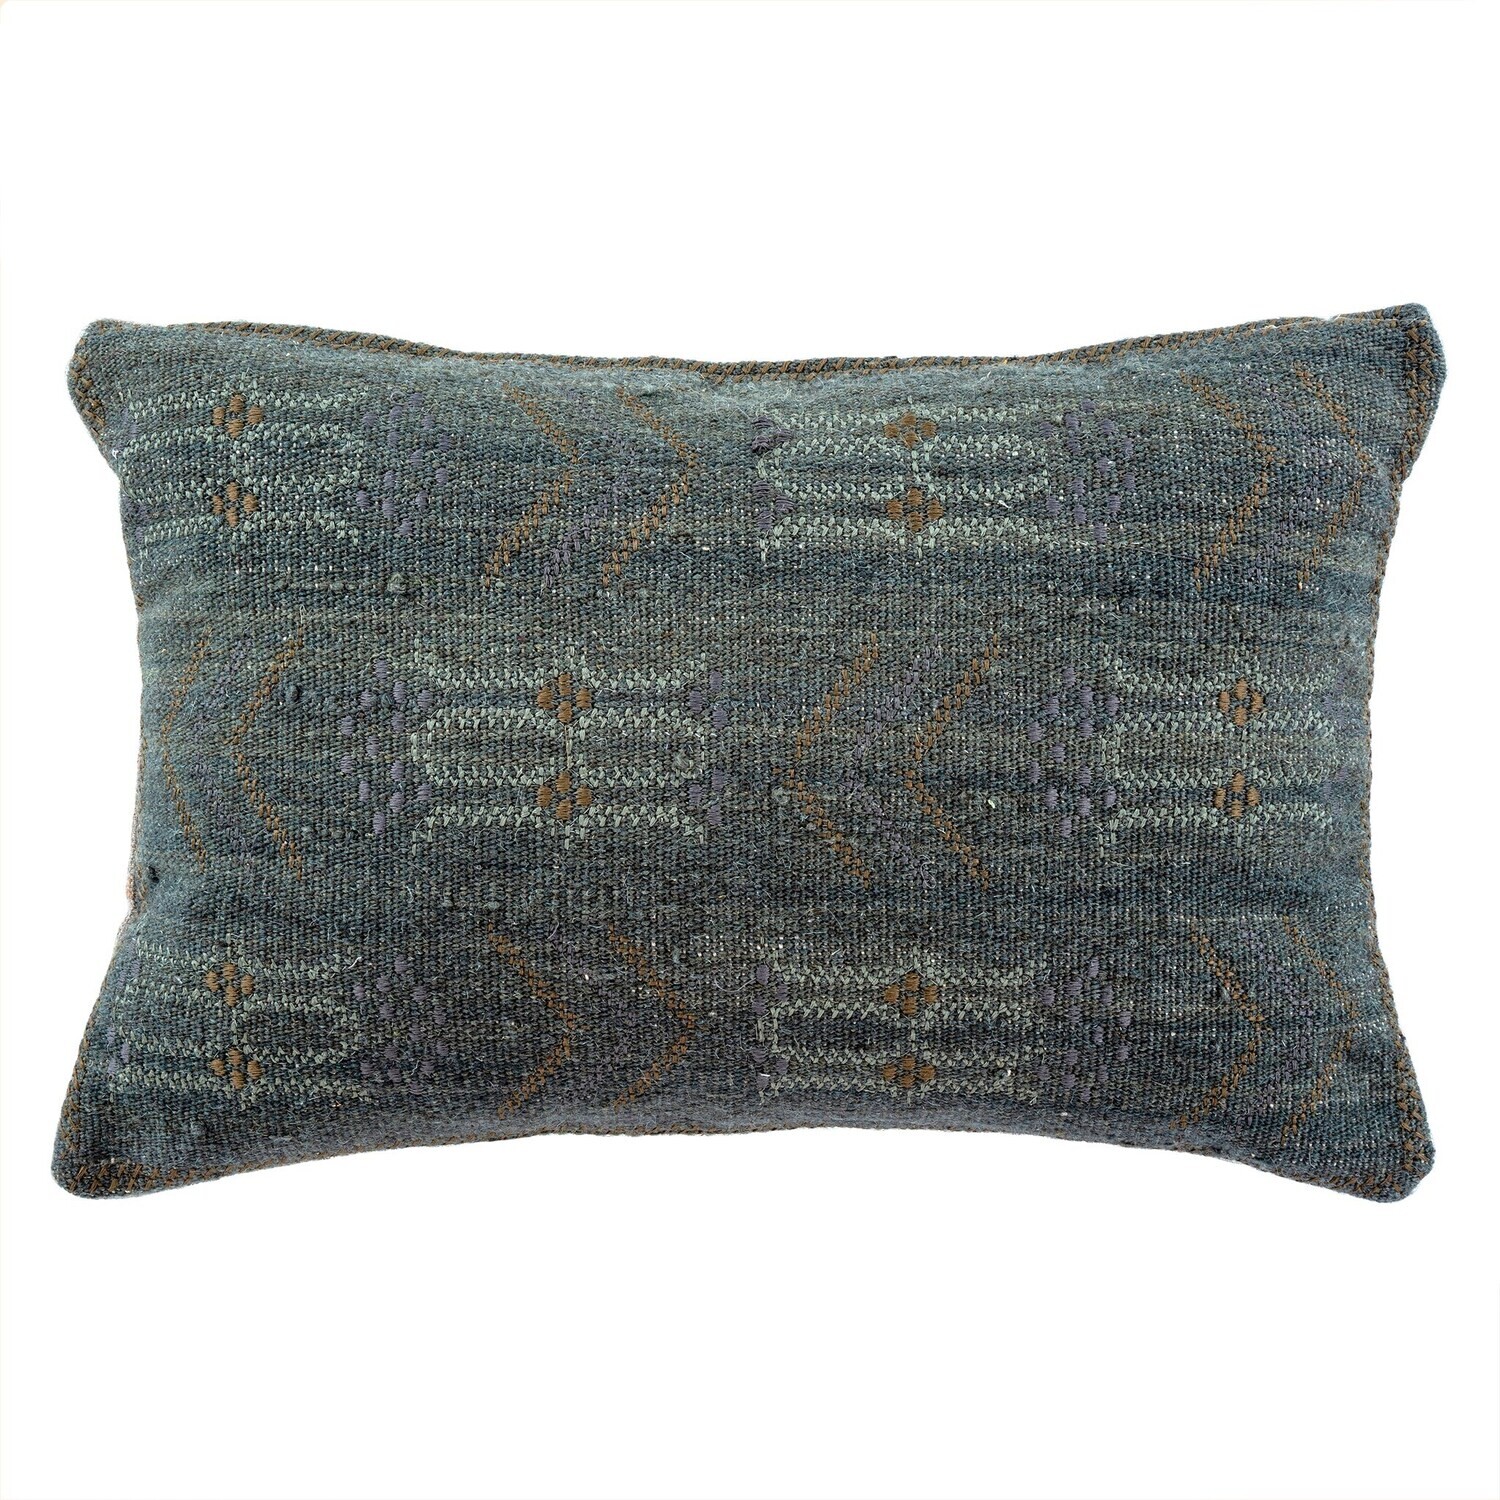 Indaba Leia Embroidered Pillow 16x24